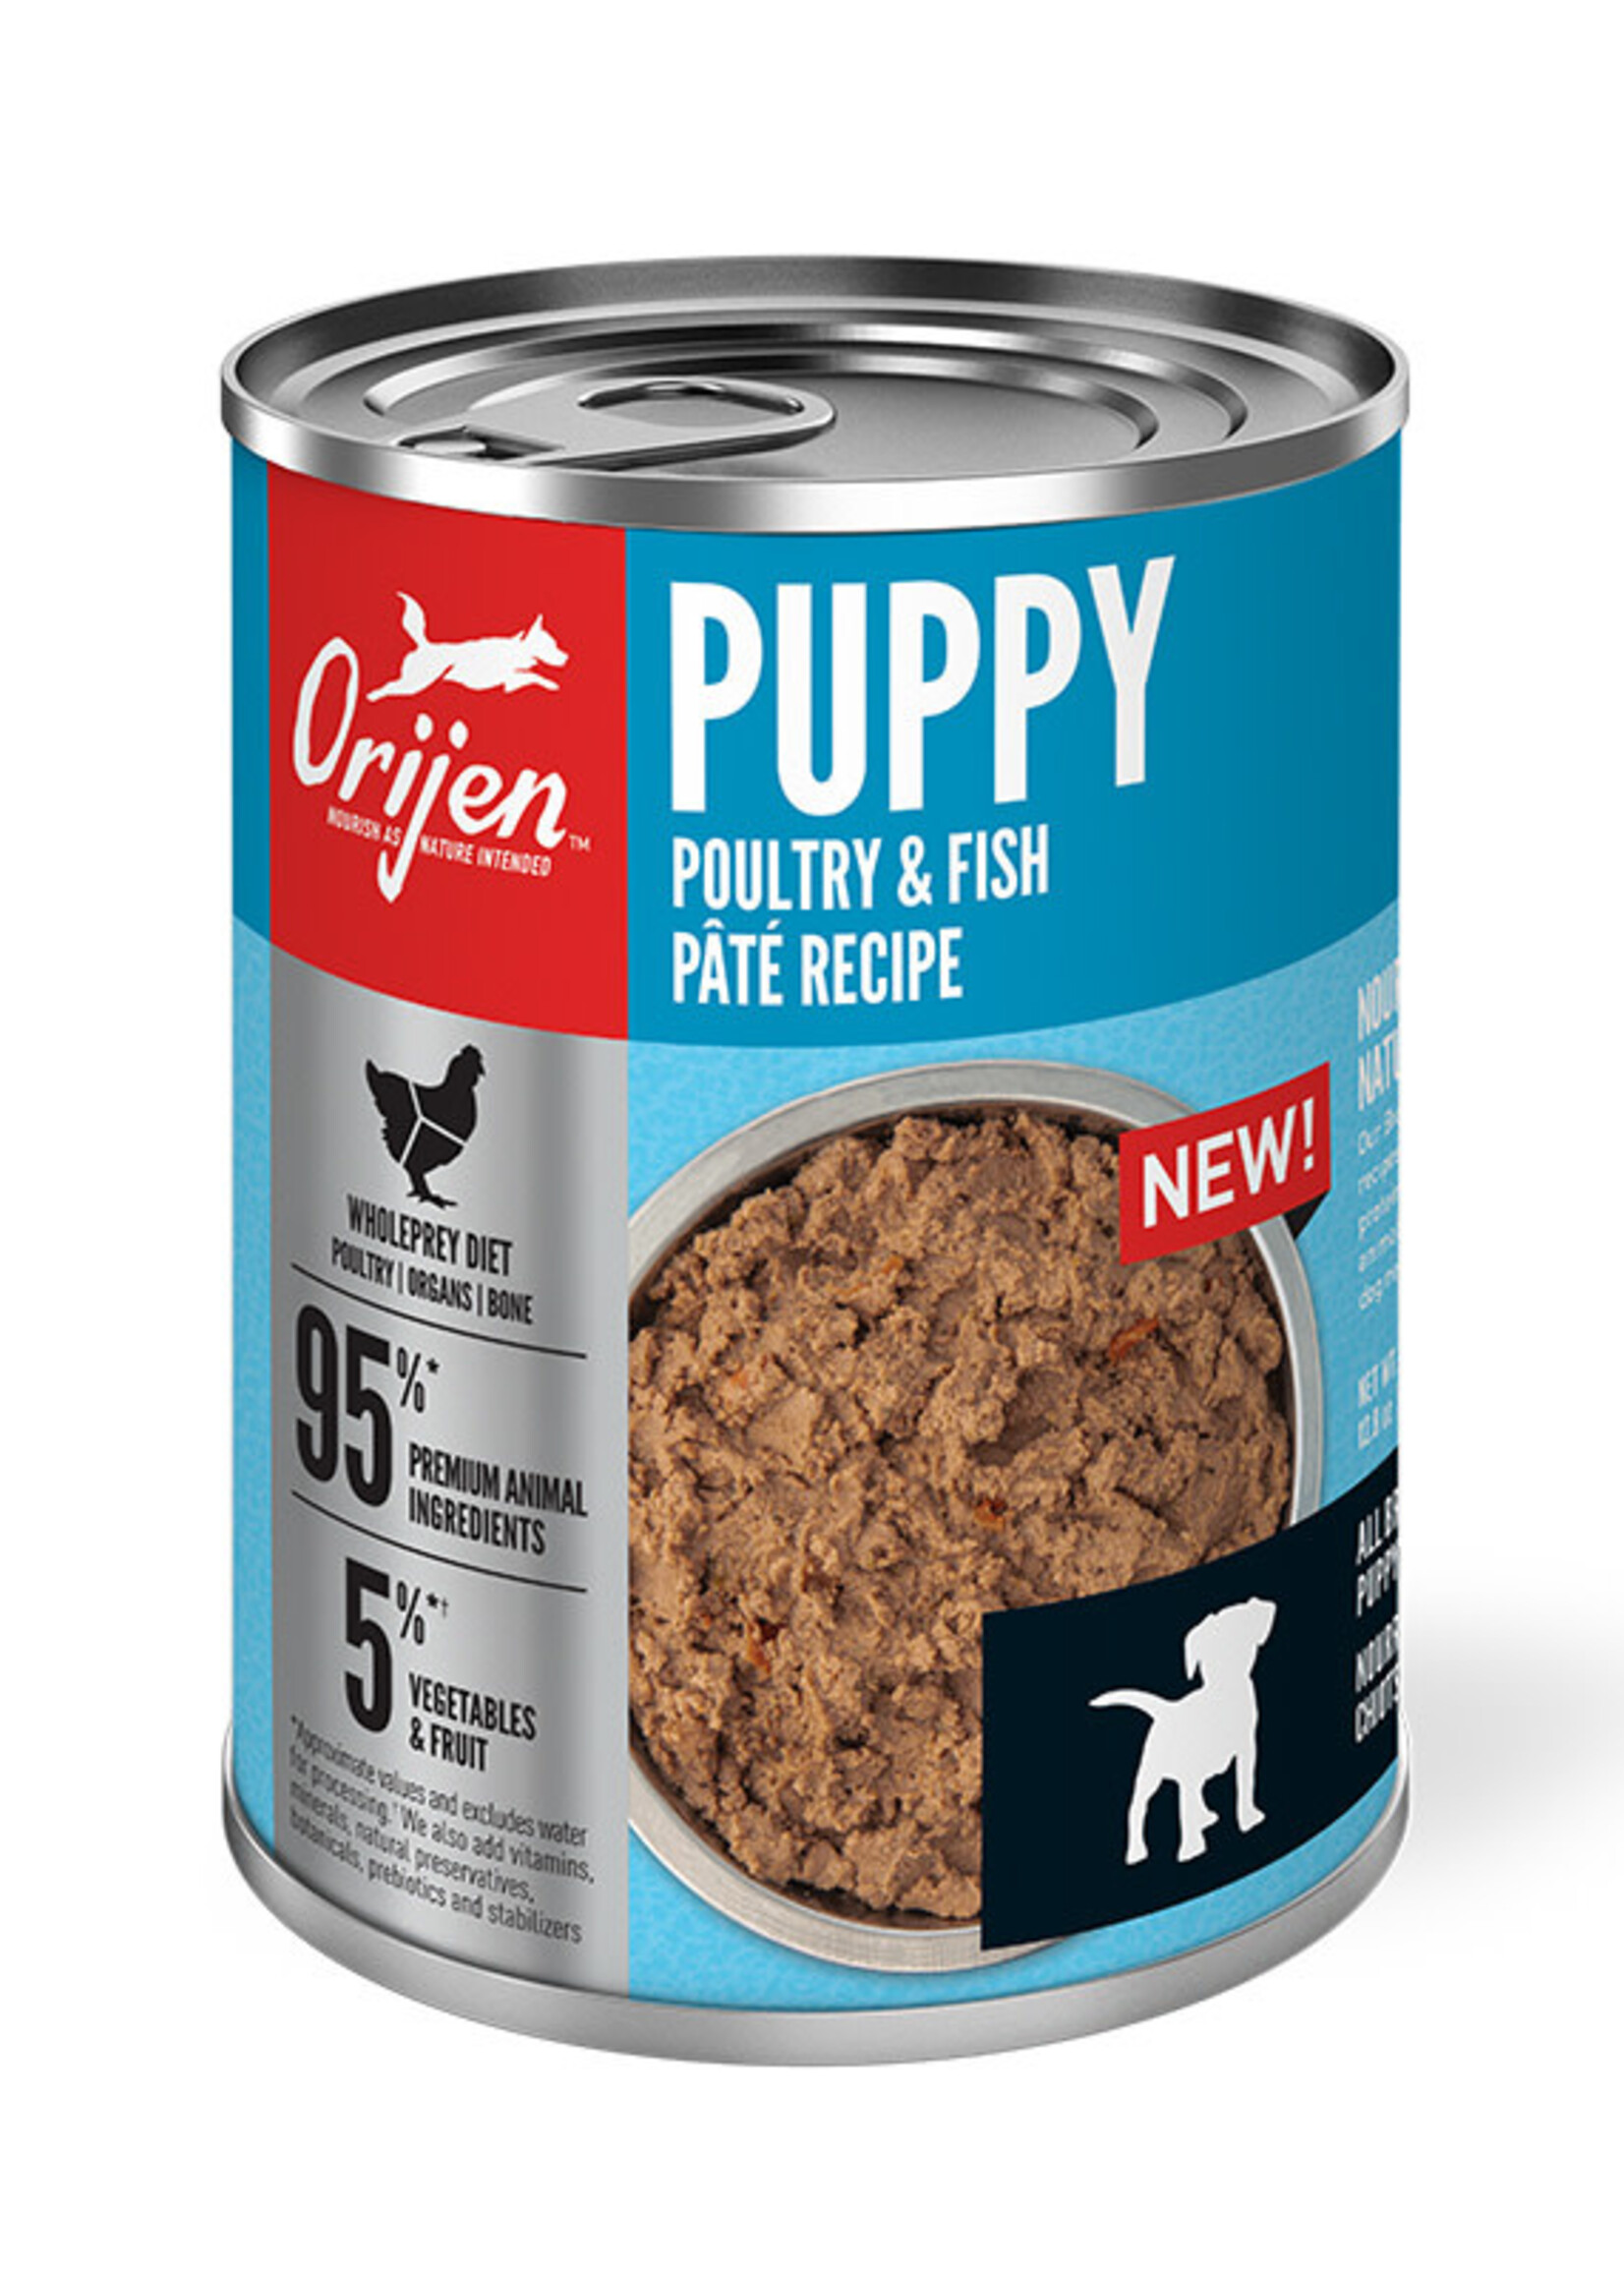 Orijen Dog Puppy Poultry & Fish Pate Recipe